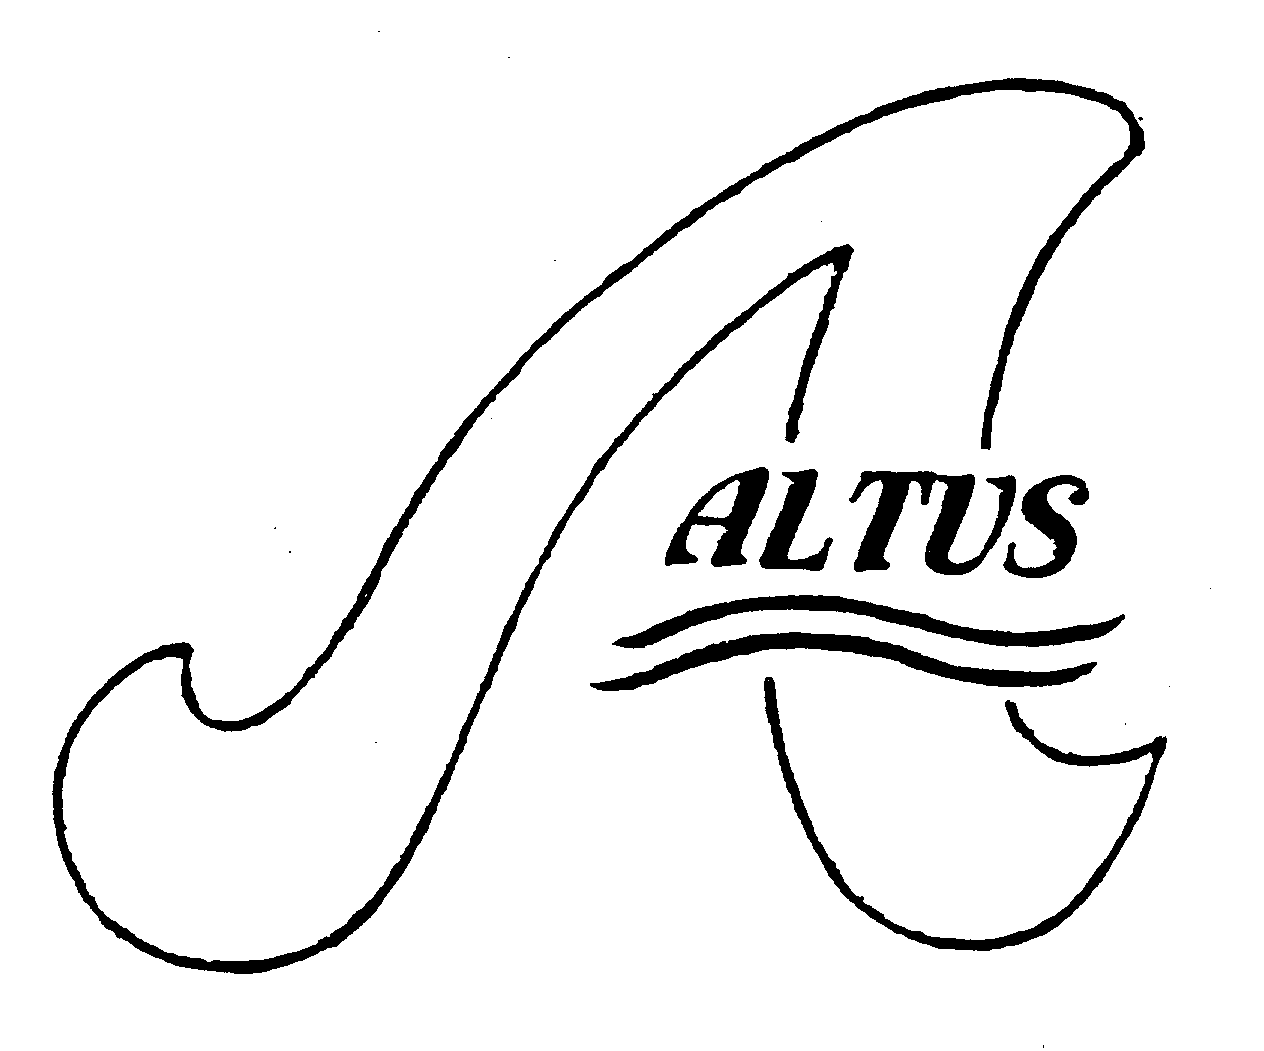  A ALTUS